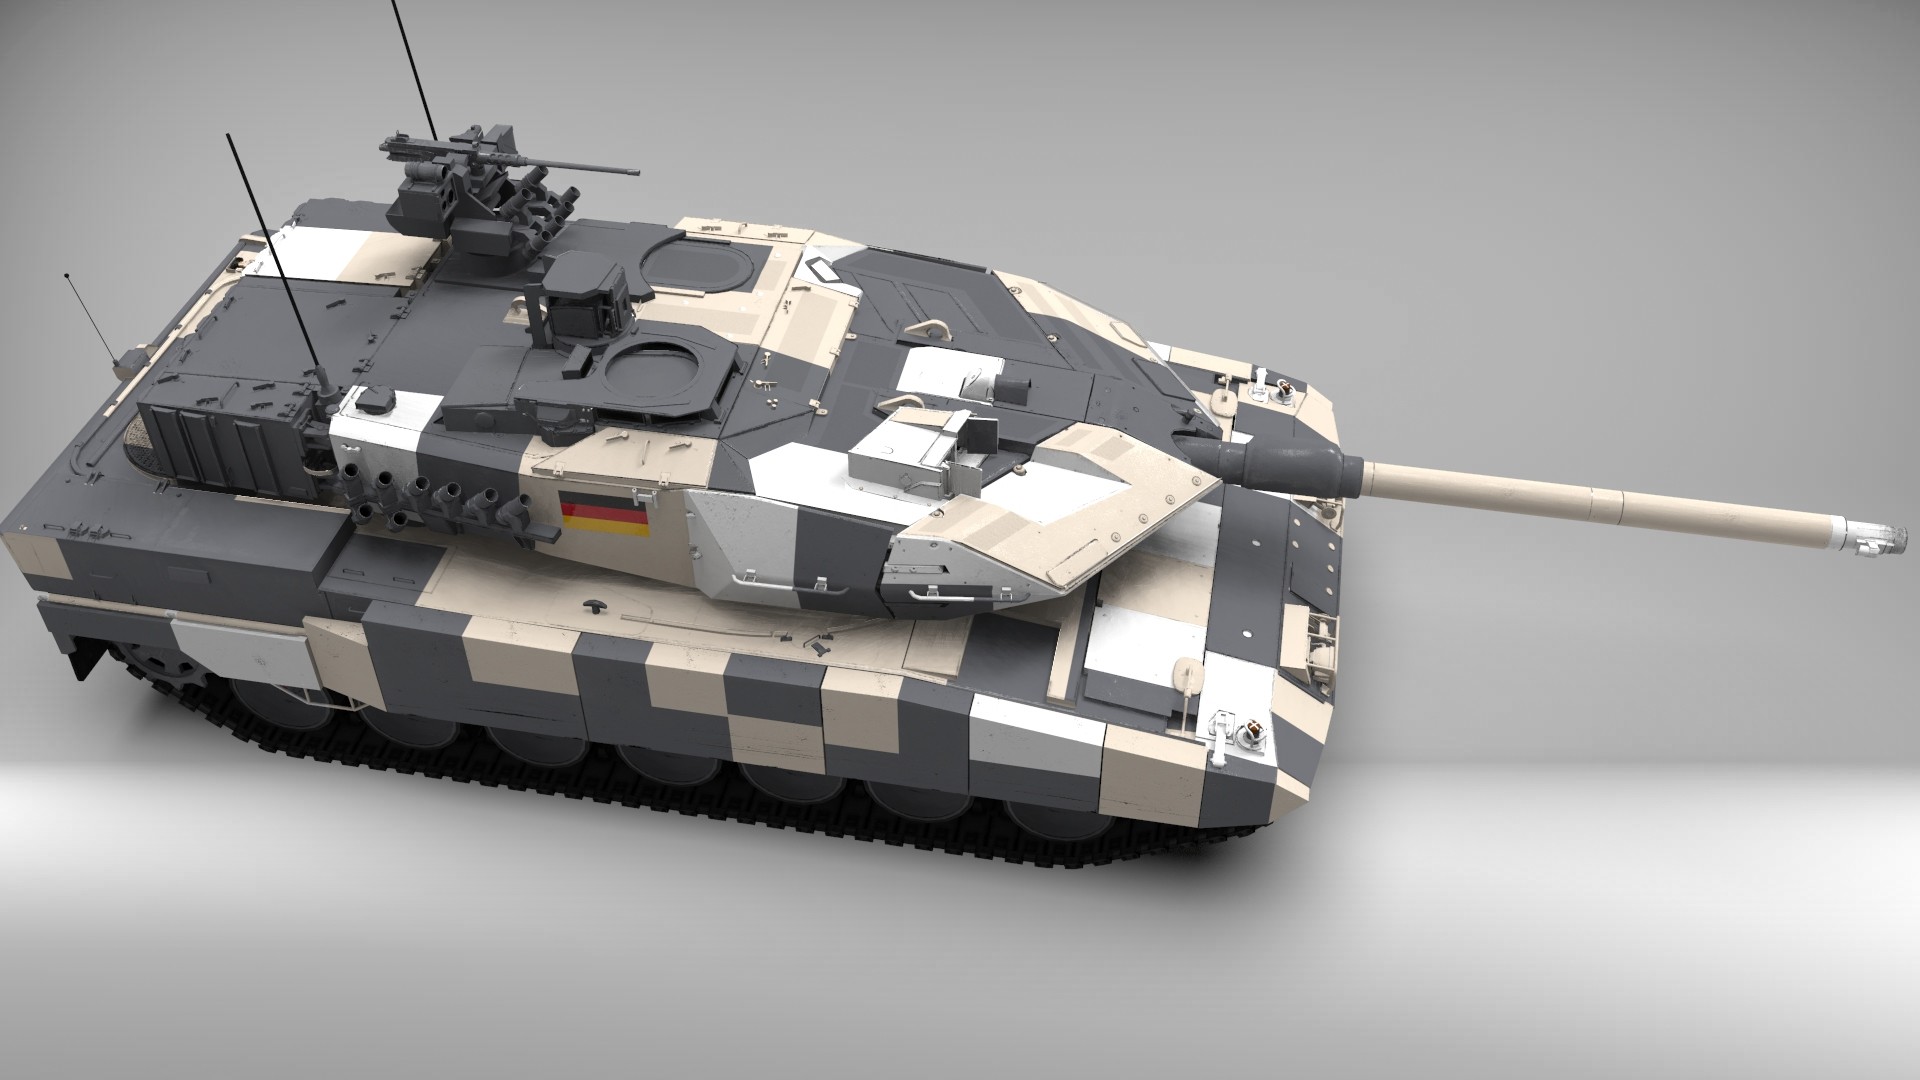 Roman Dyakonov - Leopard 2A6 with urban camo